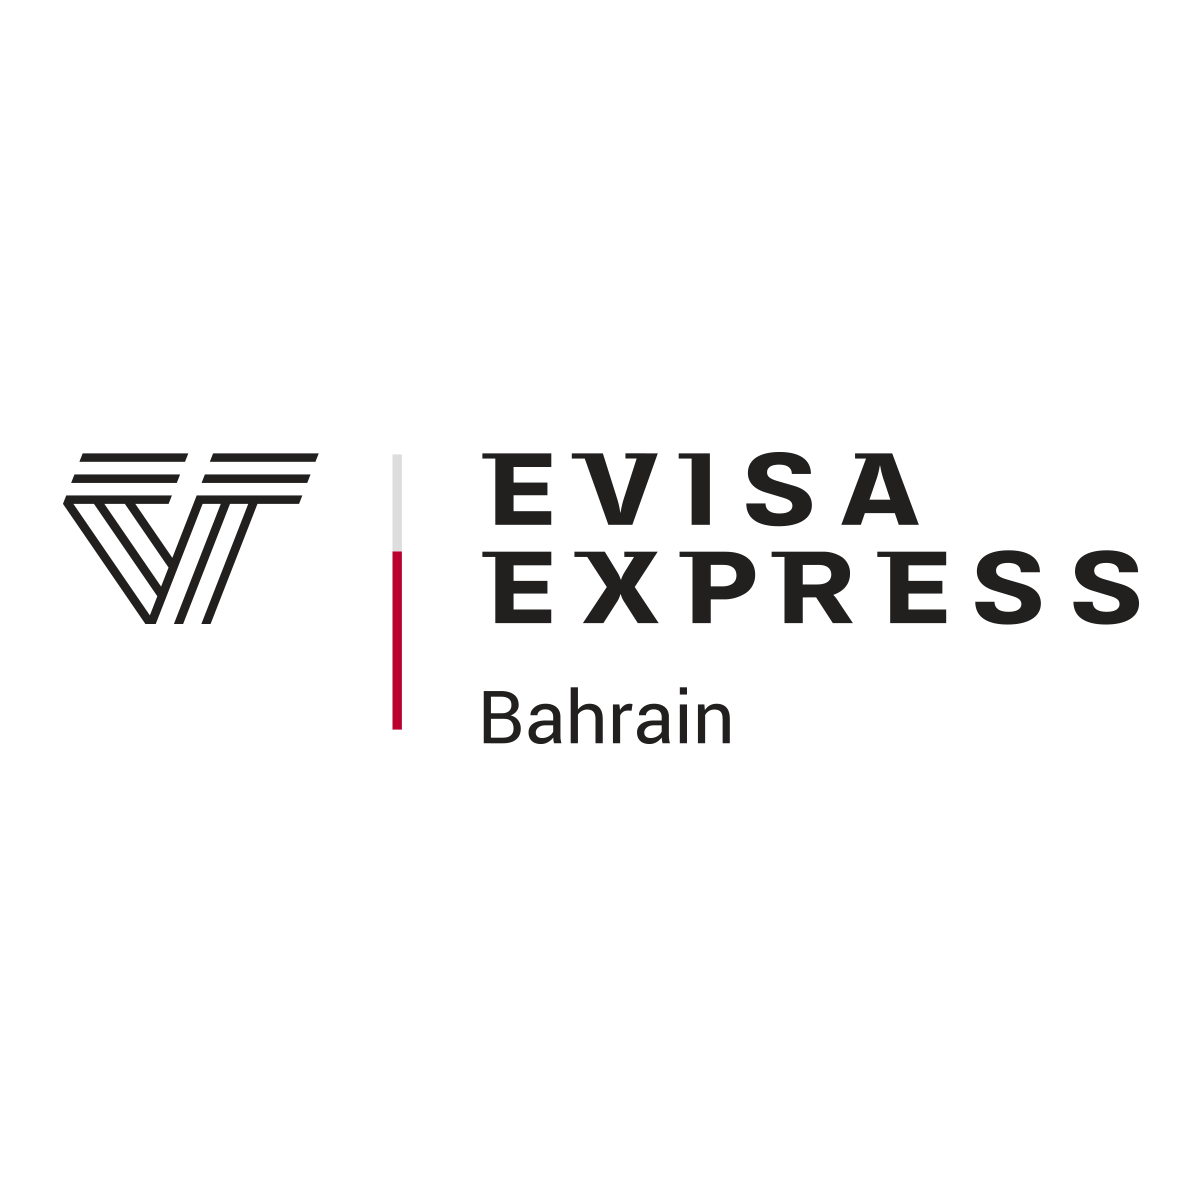 Bahrain evisa